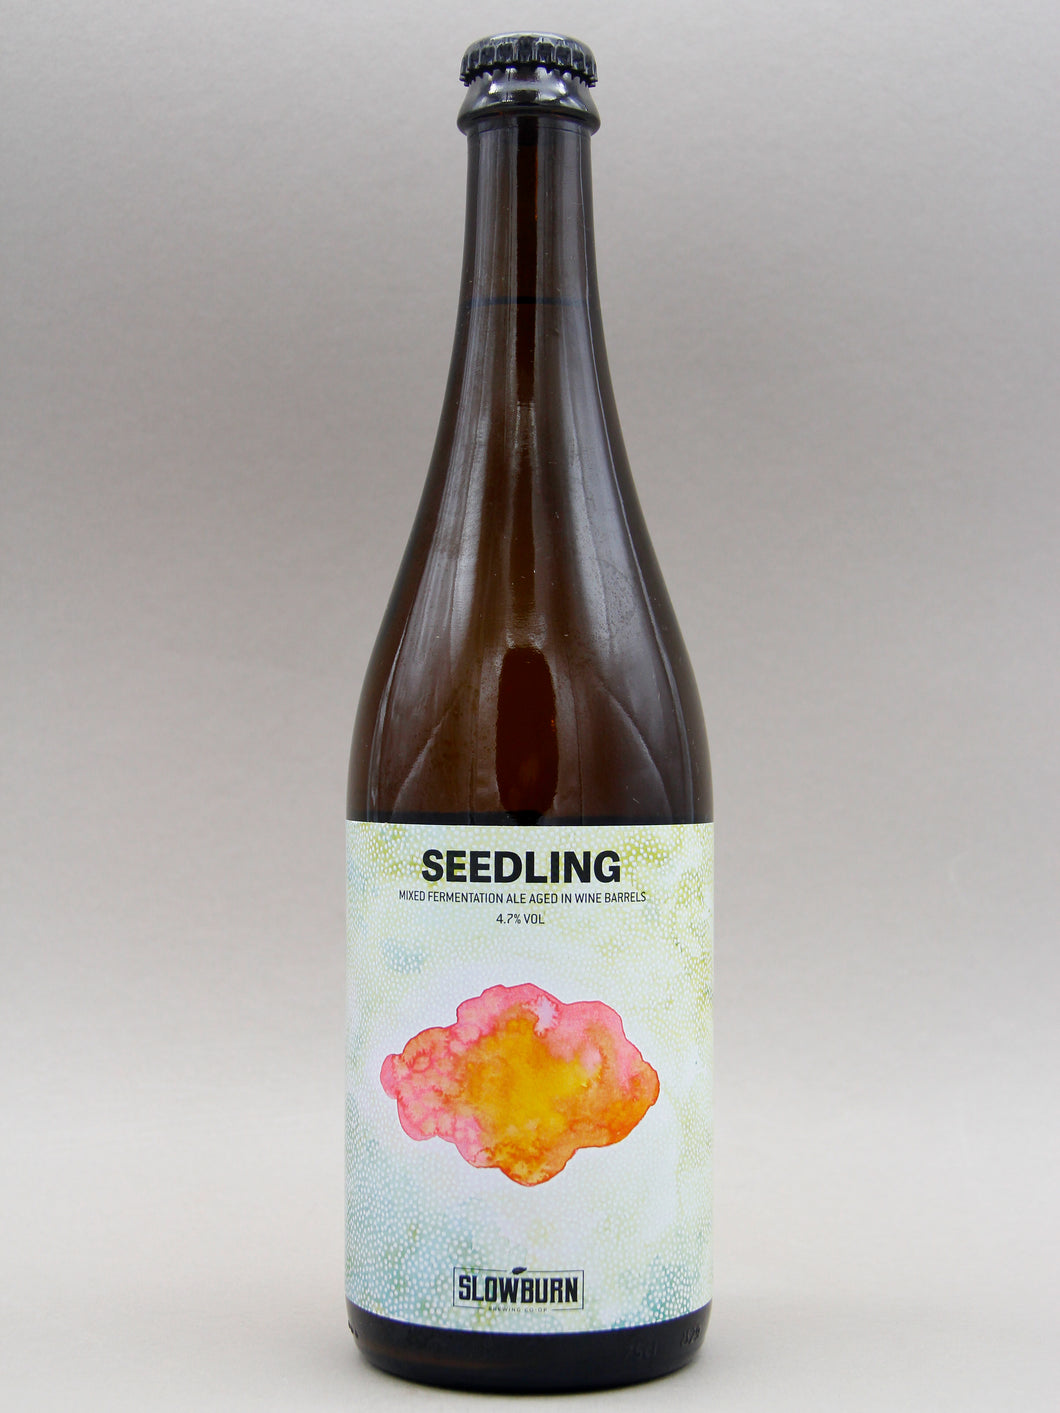 Slowburn: Seedling, Mixed Fermentation Ale Aged In Wine Barrels (4.7%, 75cl)